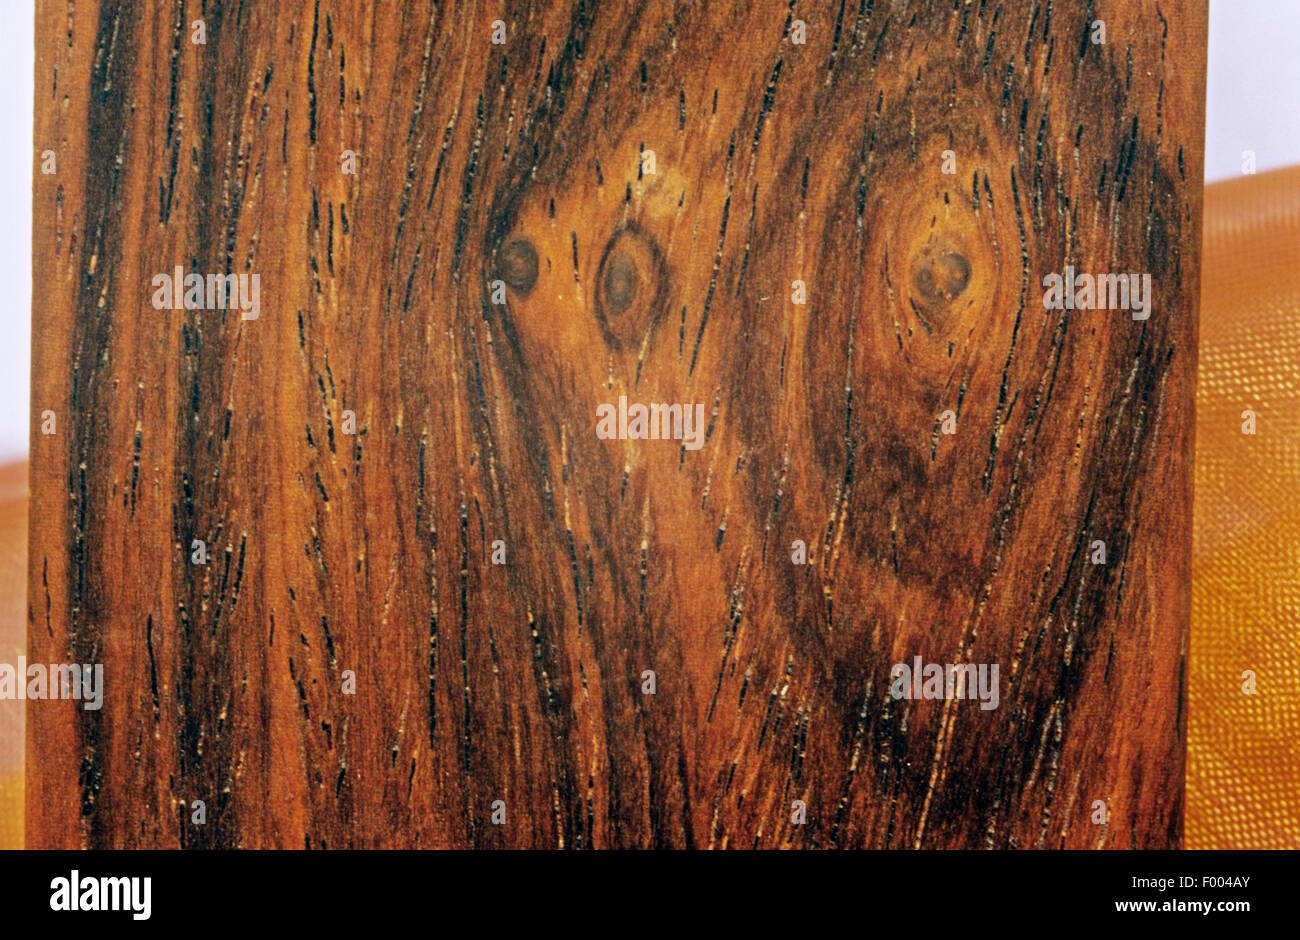 Brazilwood, Pernambuco tree, Nicaragua wood  (Caesalpinia echinata), wood Stock Photo